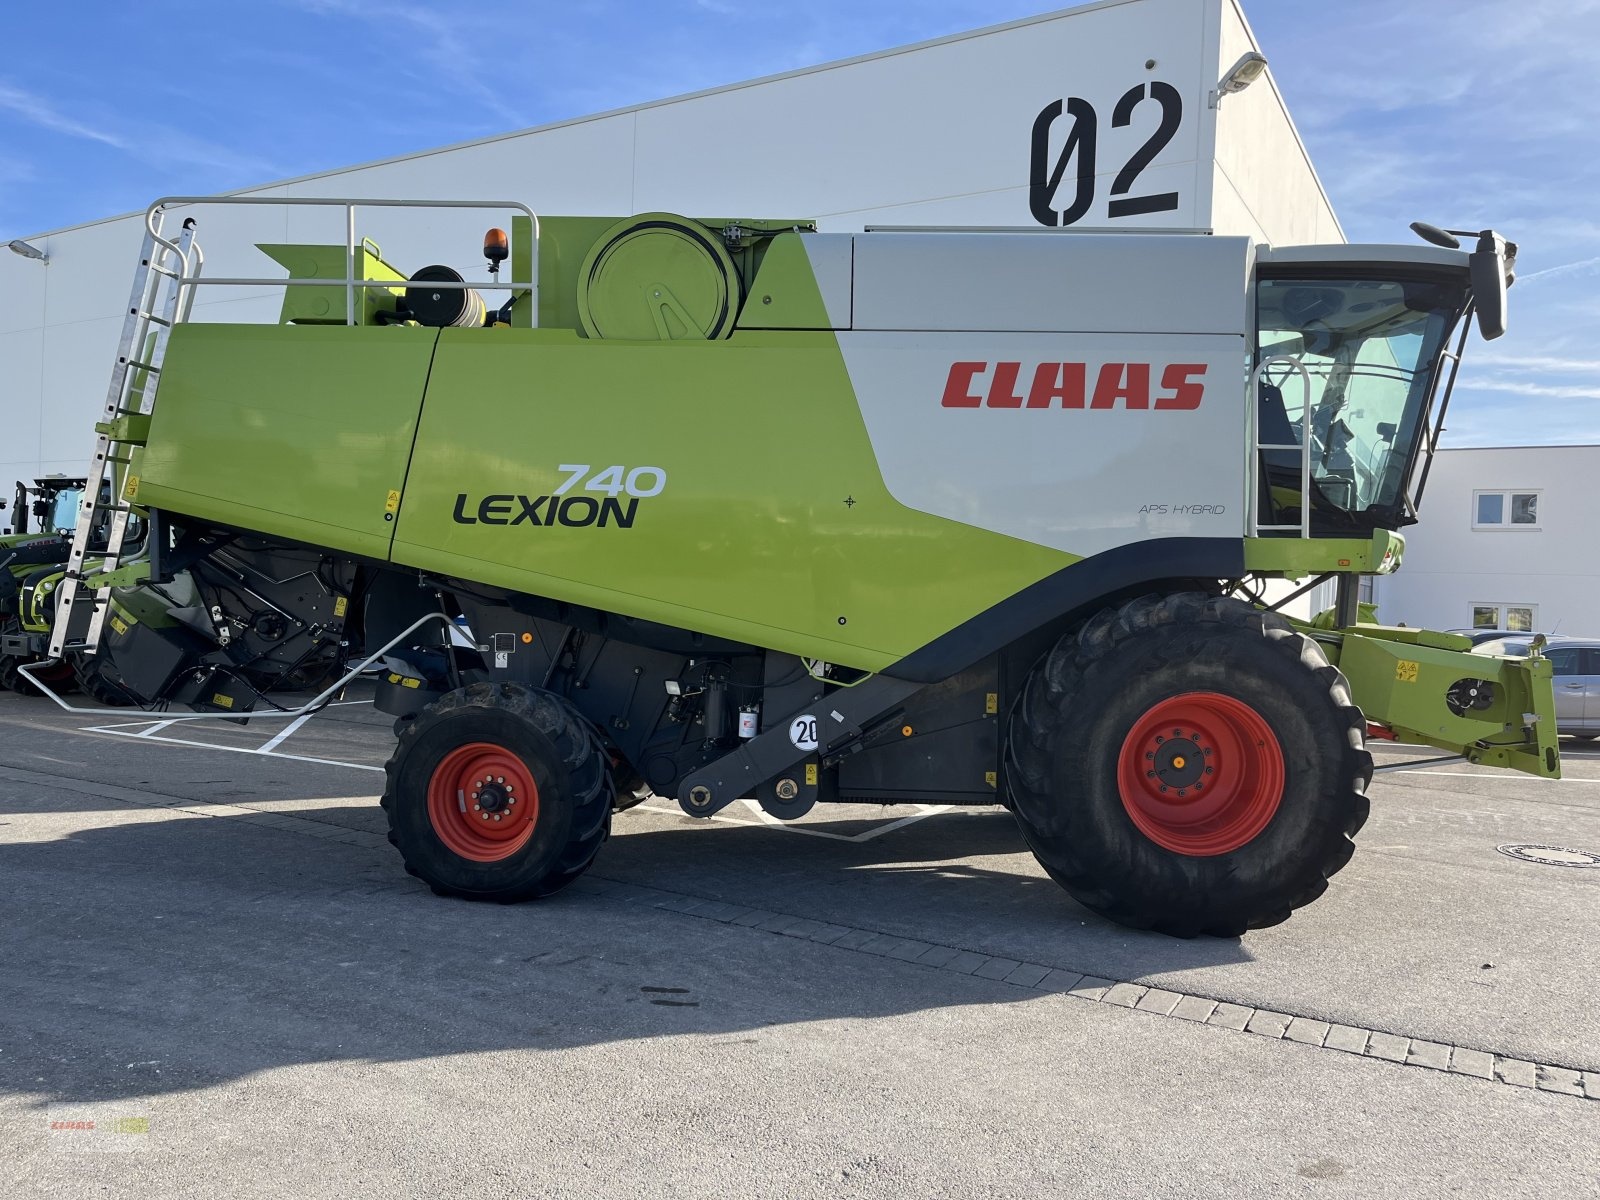 Claas Lexion 740 combine €150,000